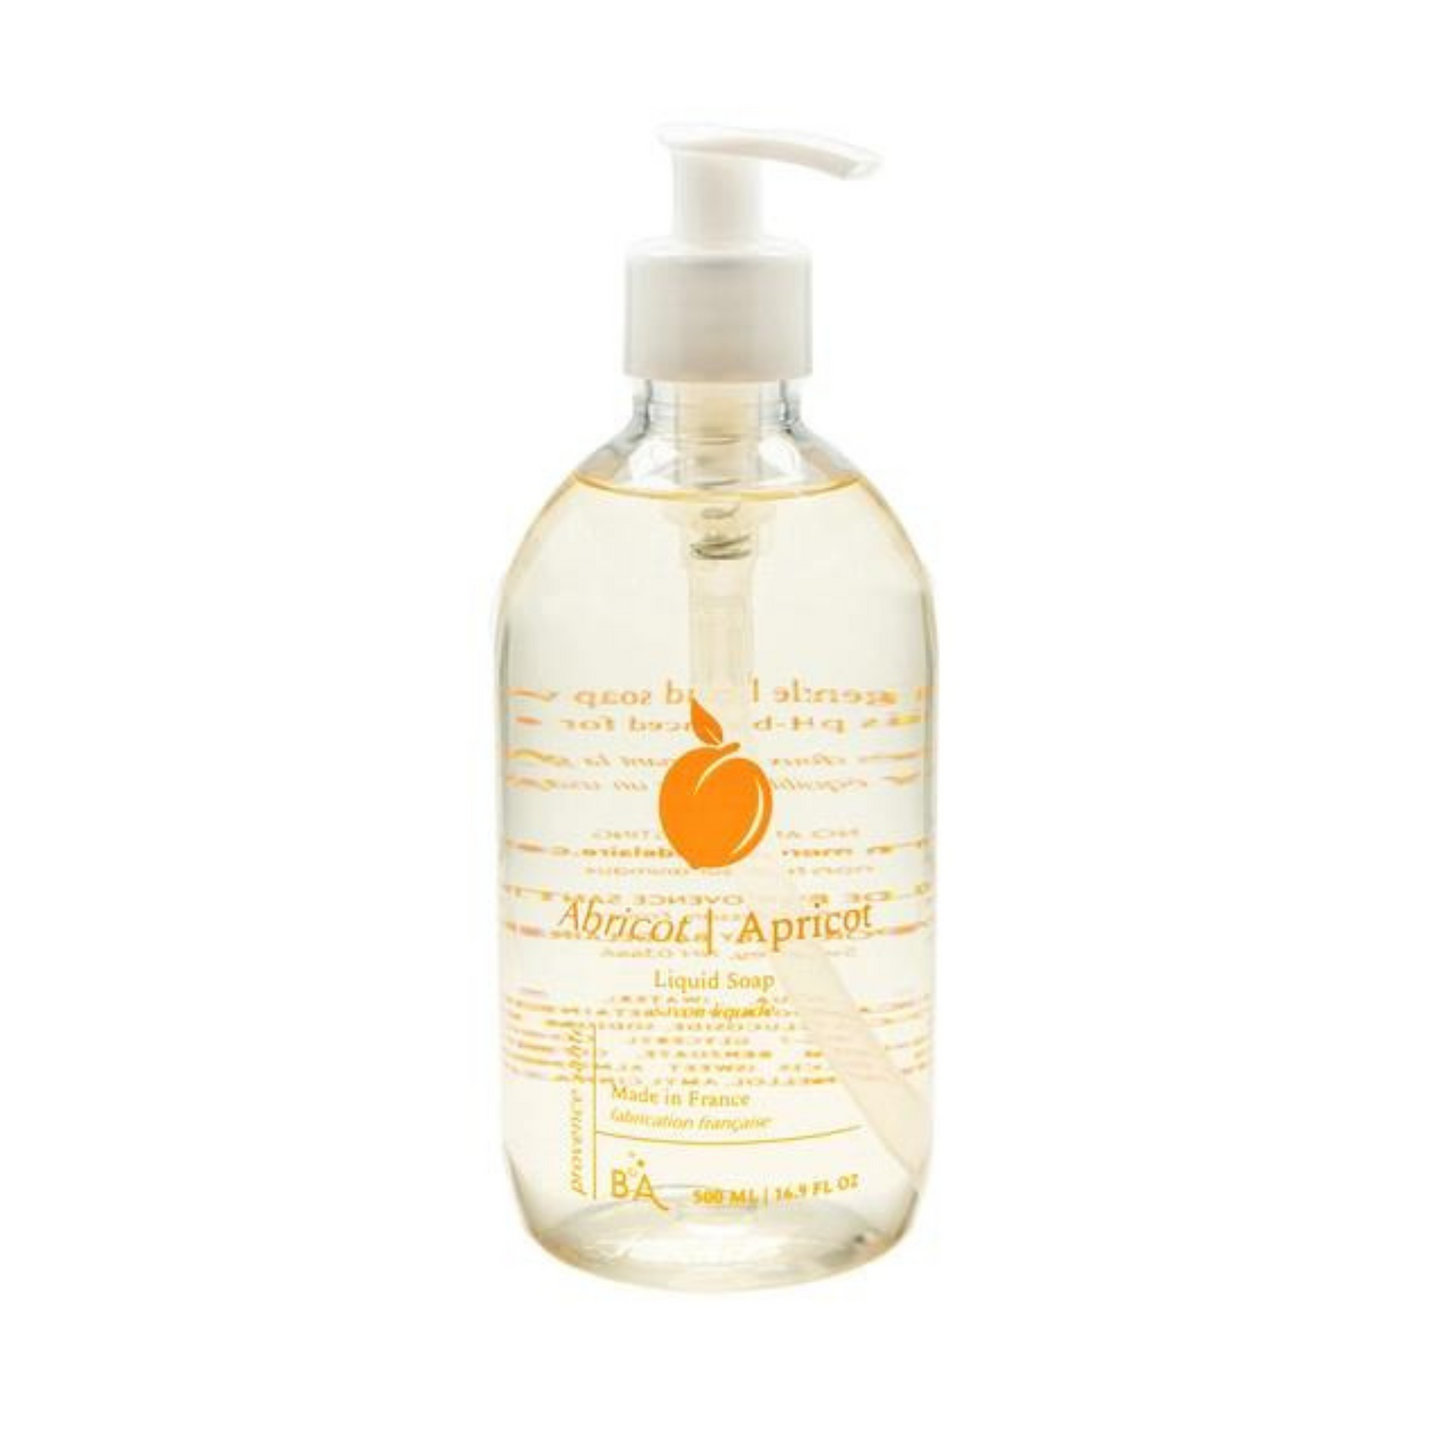 Primary image of Apricot Liquid Soap